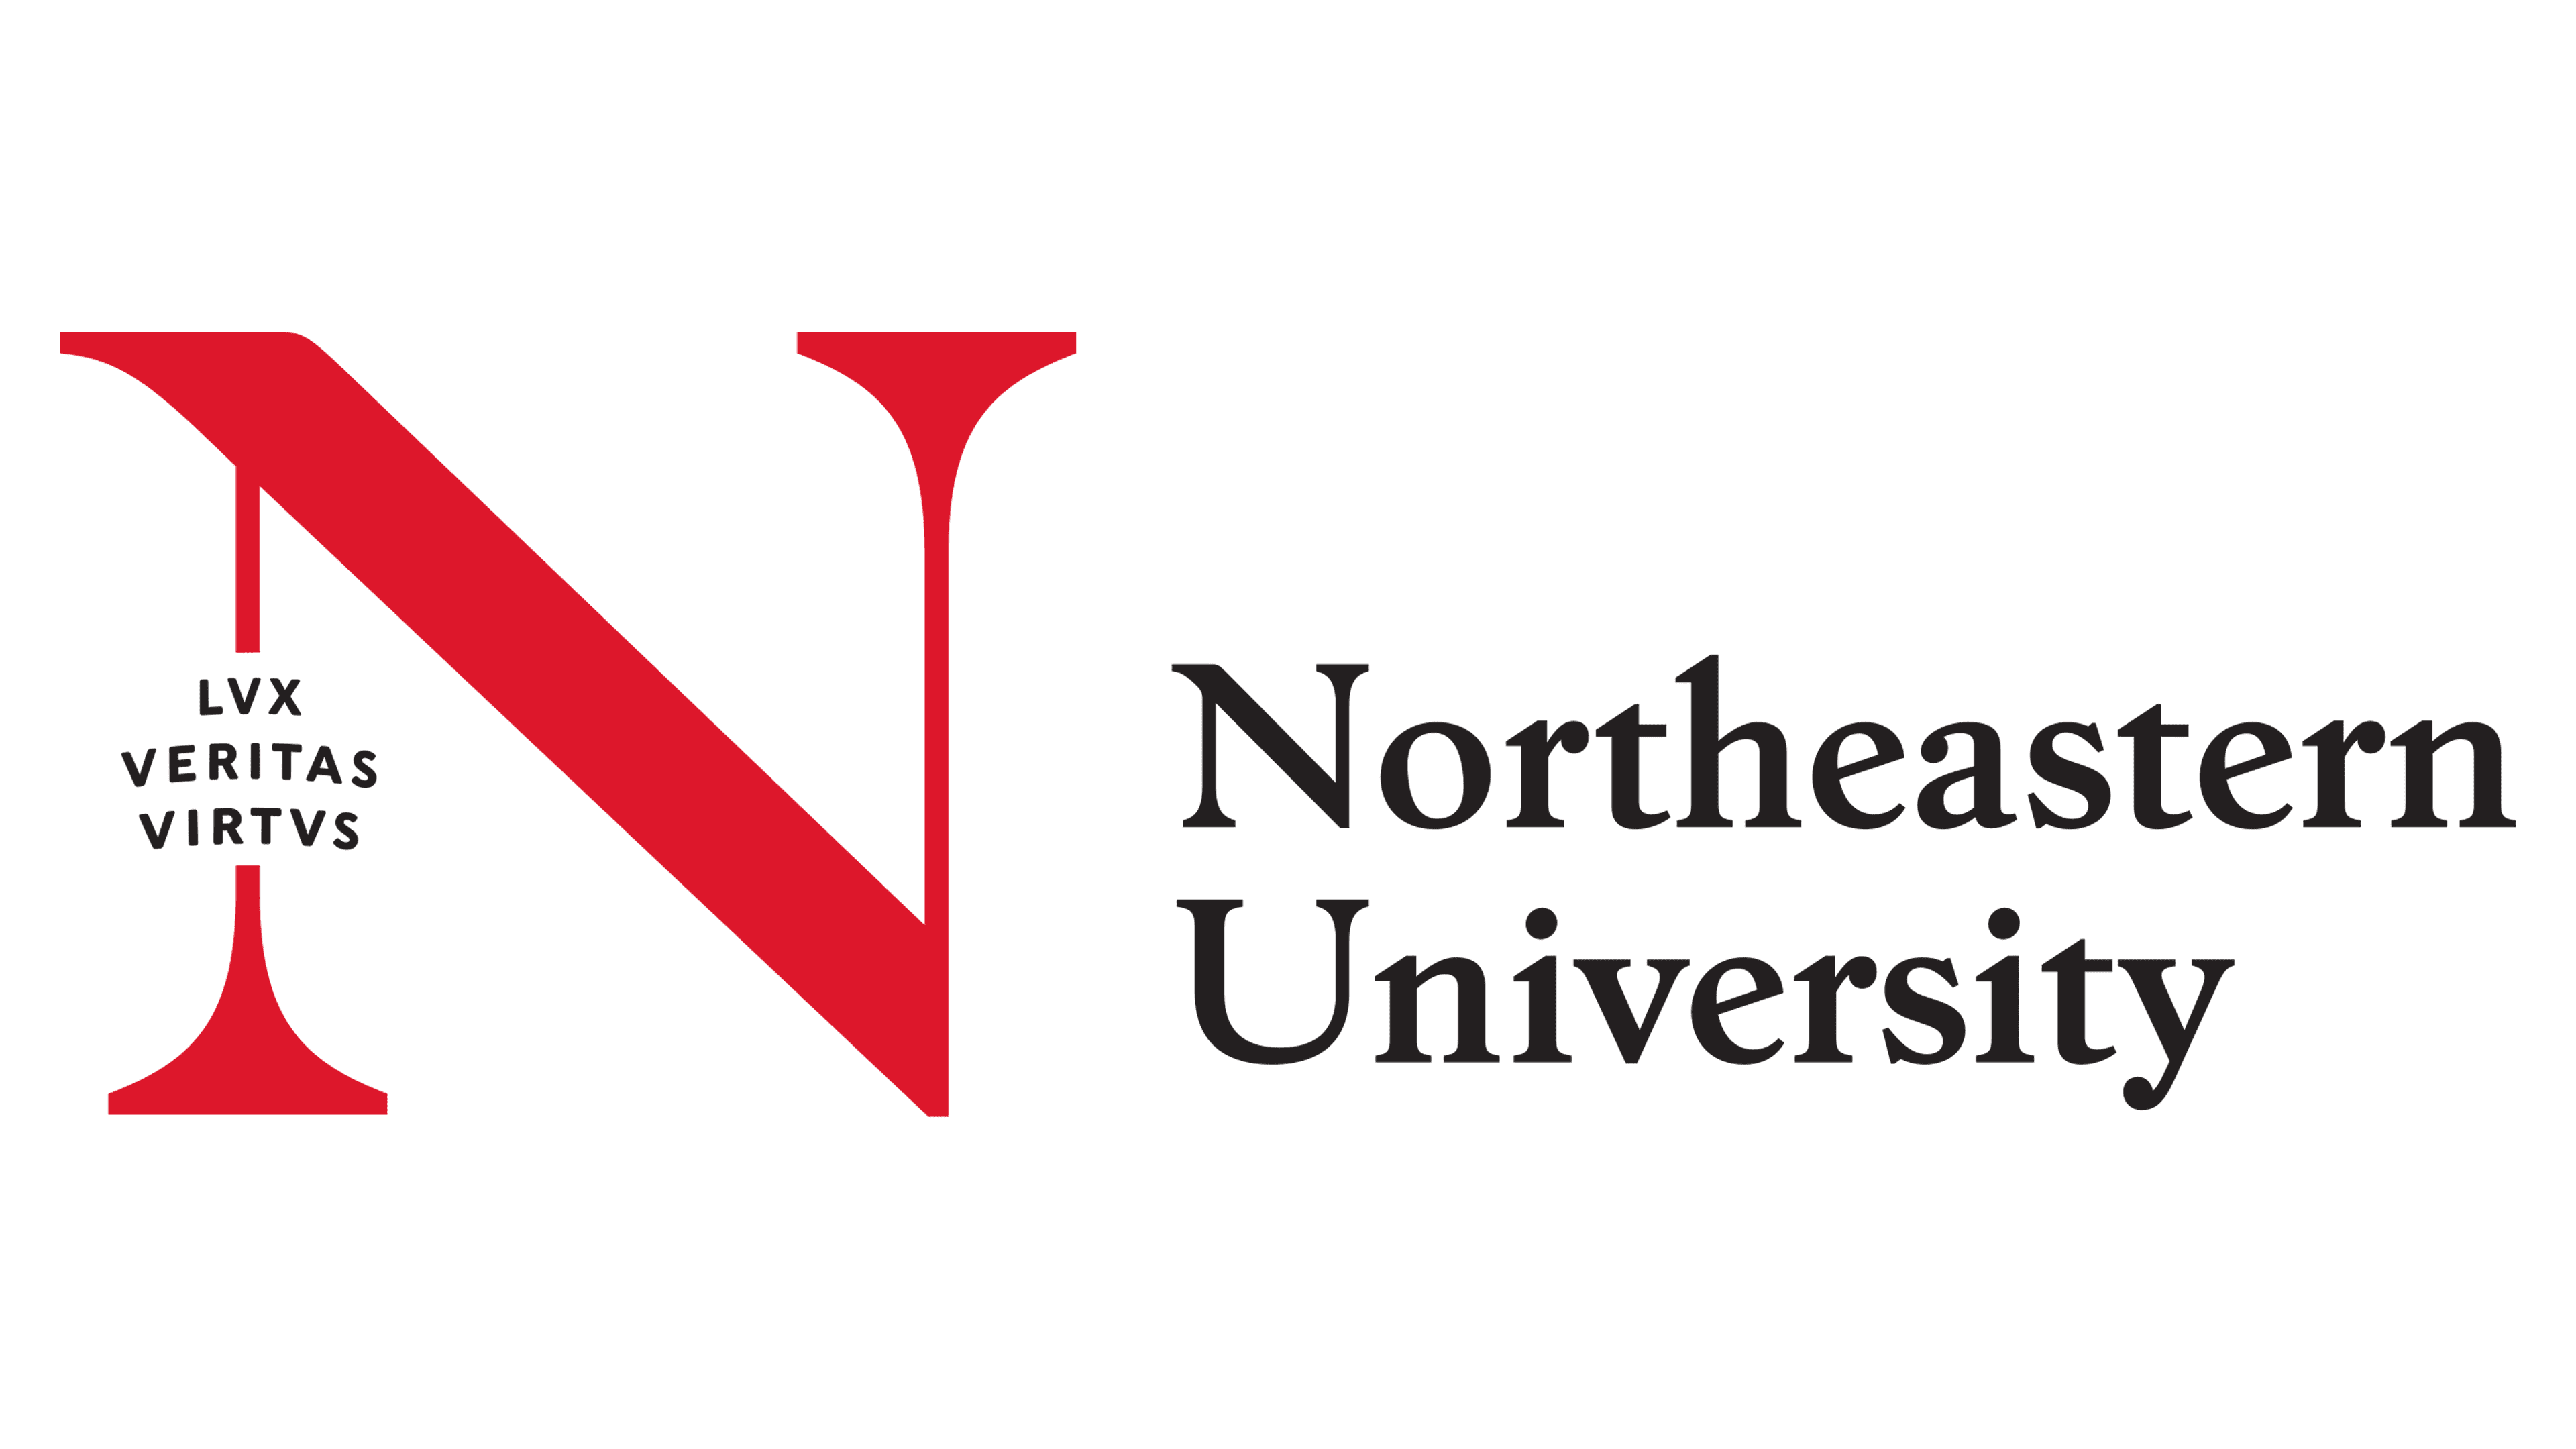 northeastern-university-logo.png